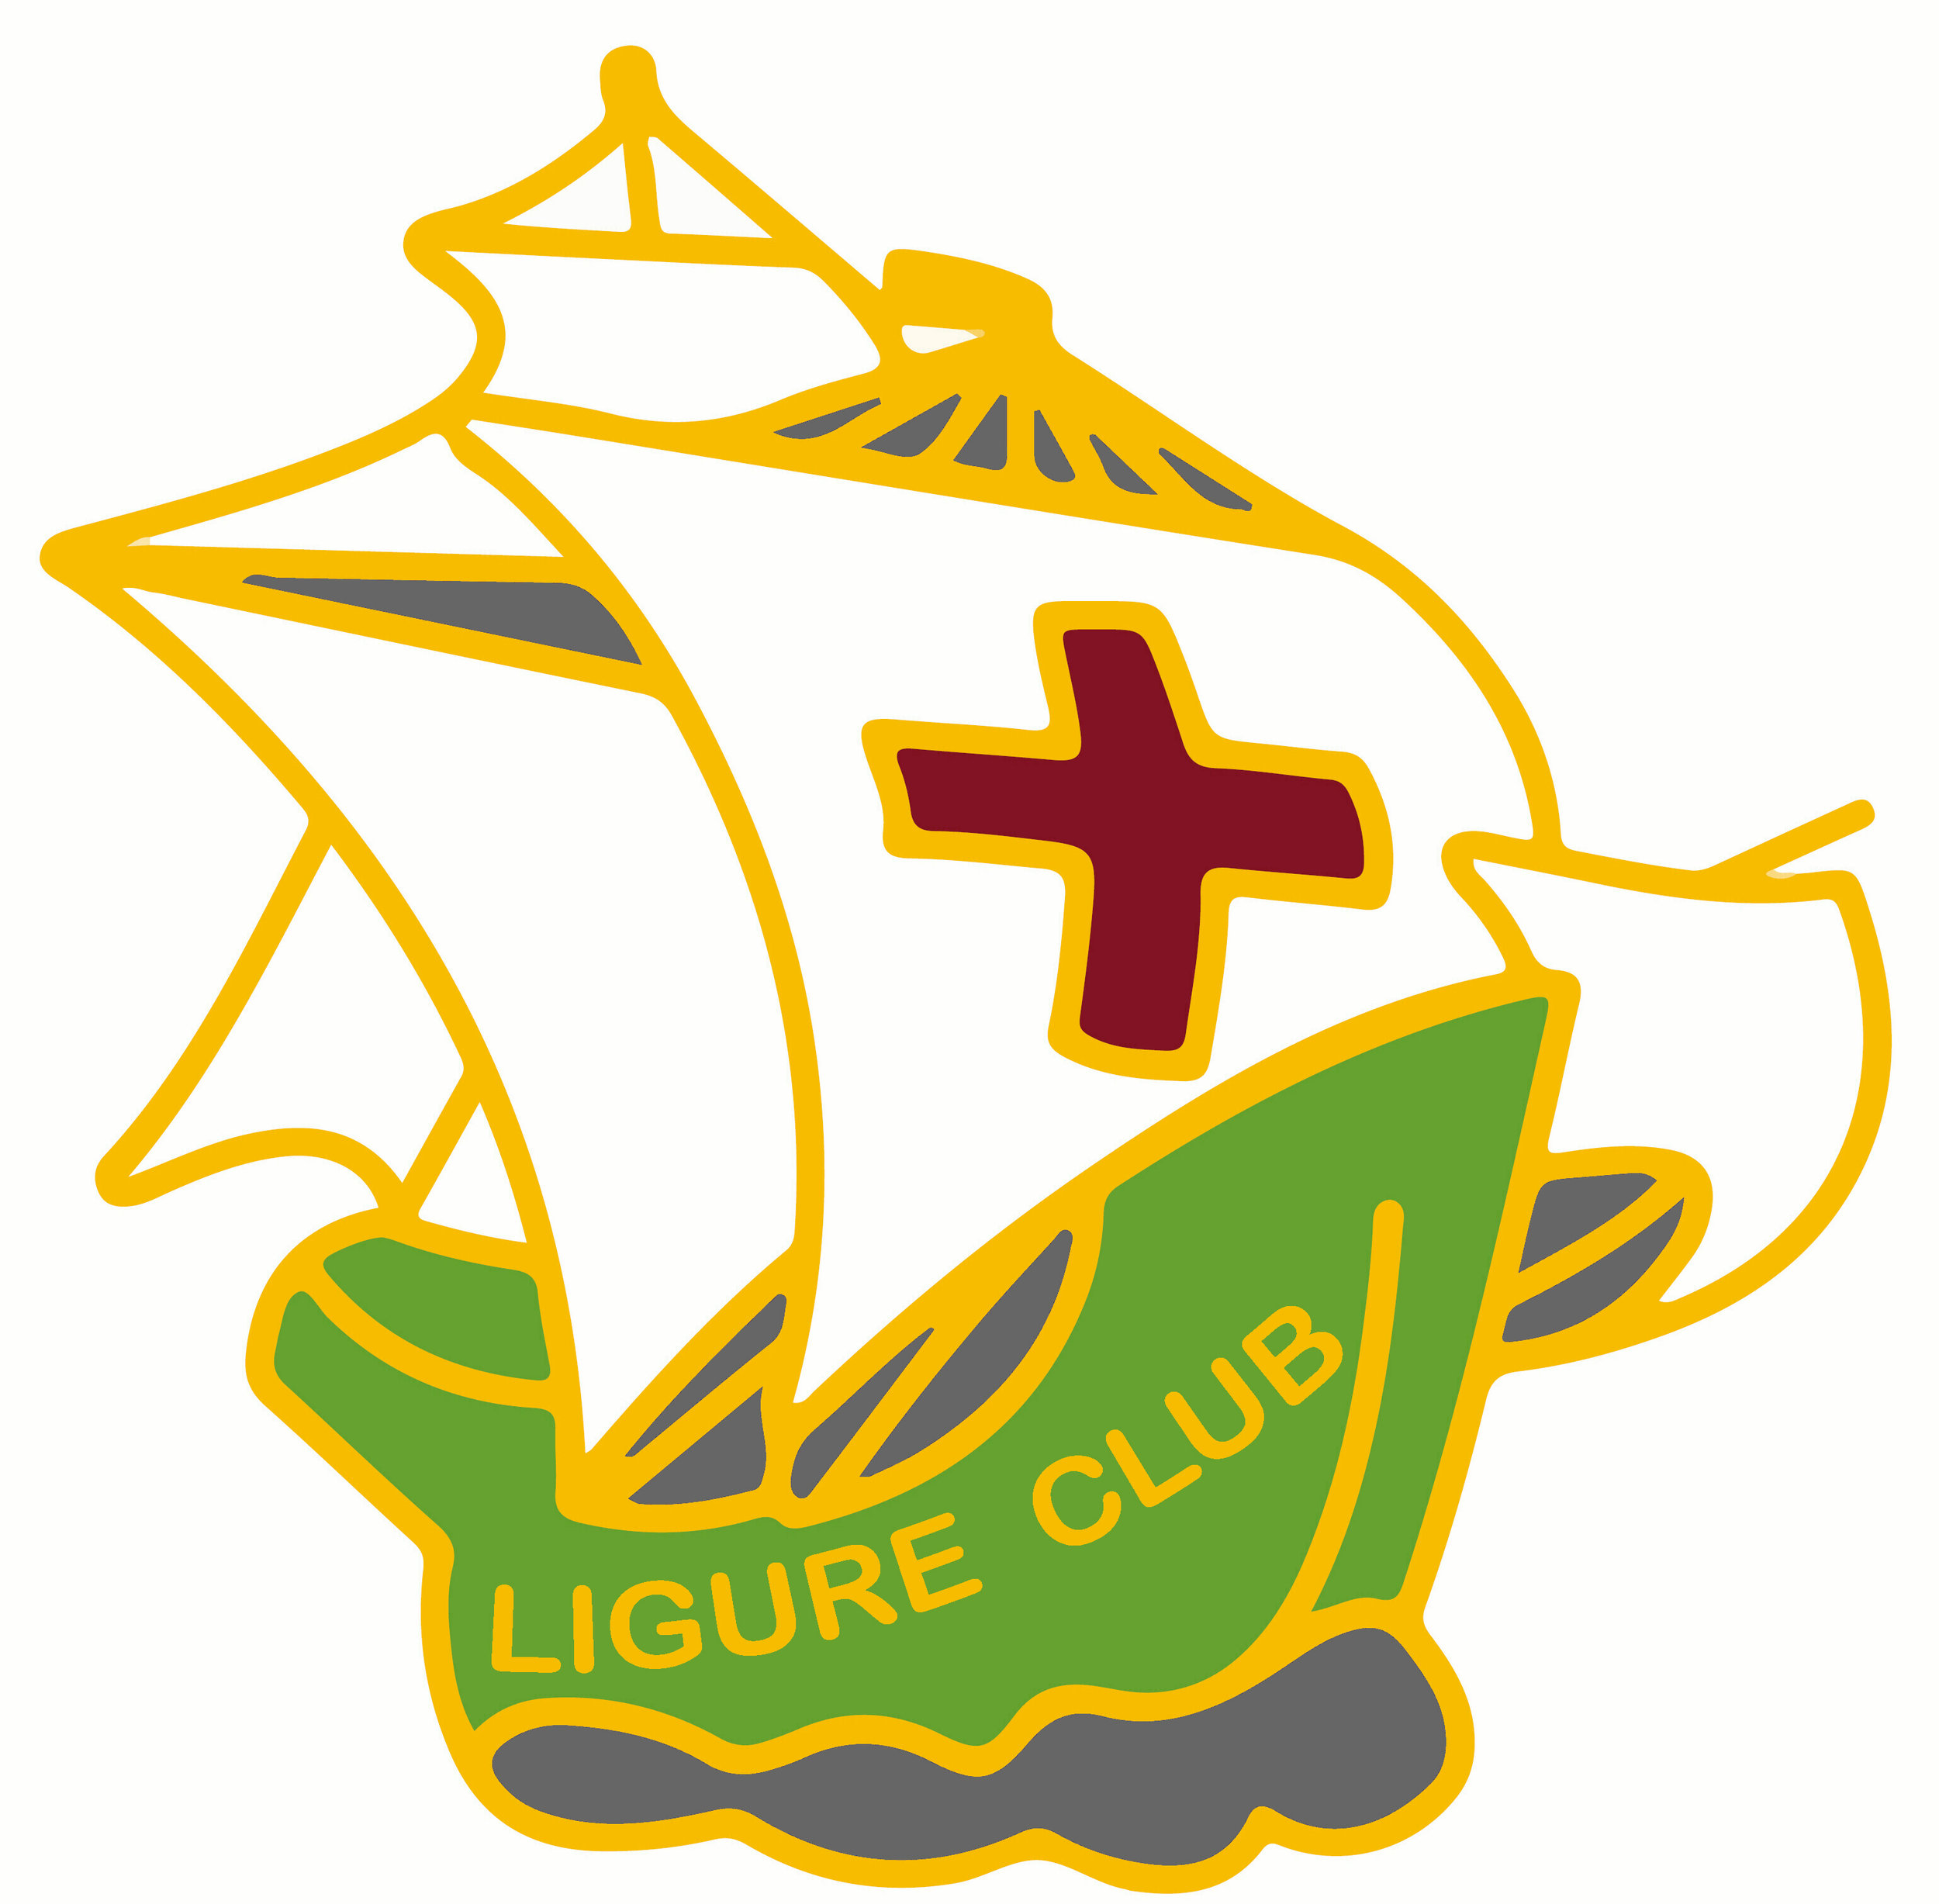 Ligure Club